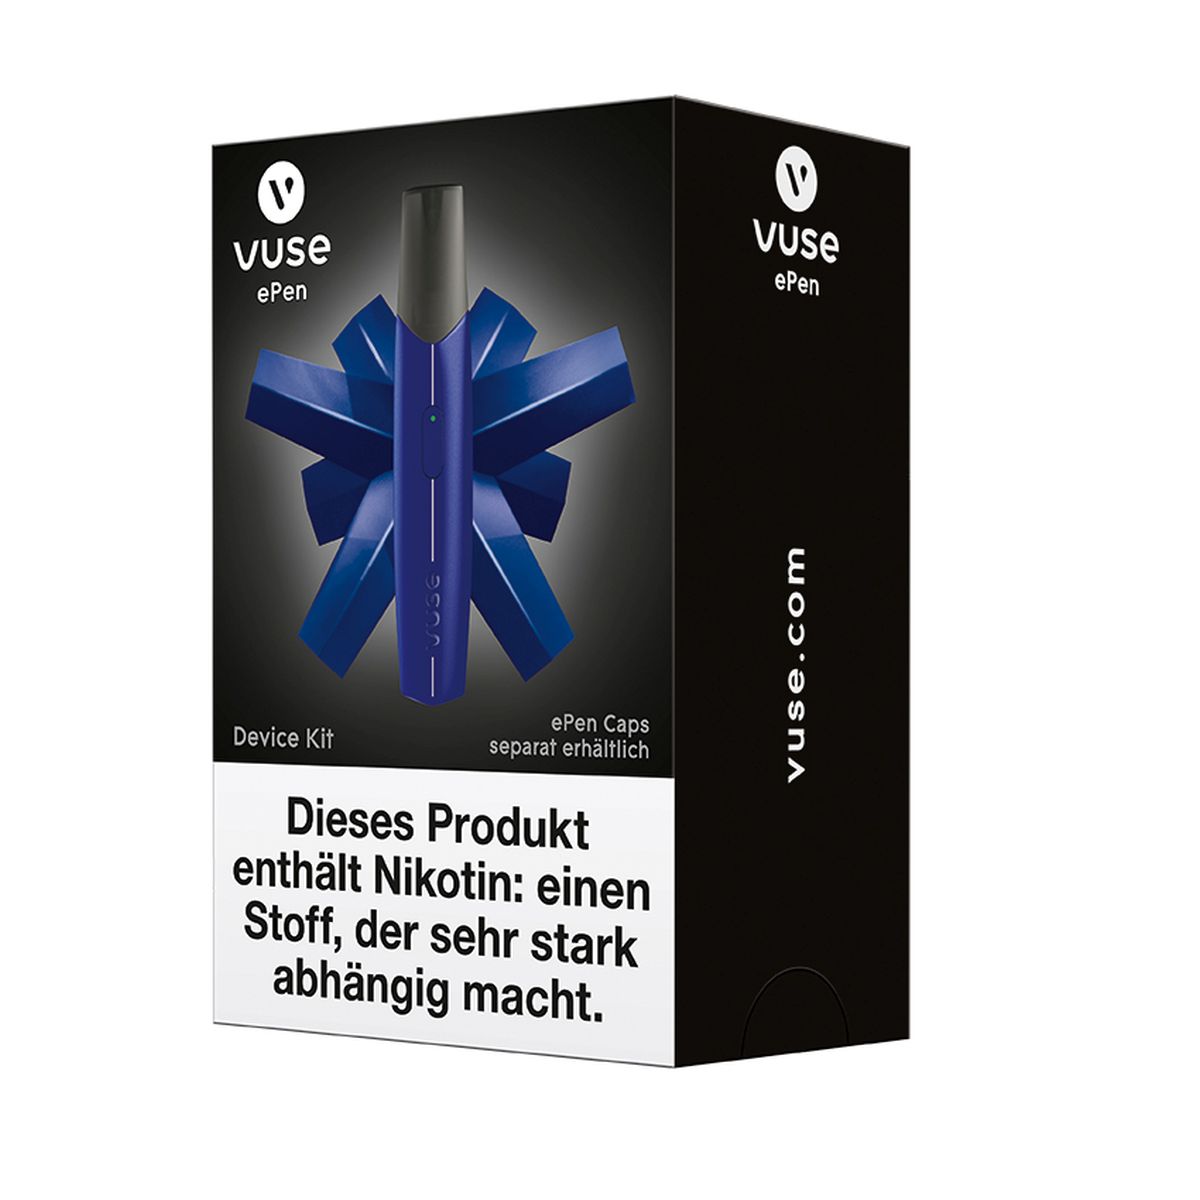 Vuse Vuse ePen Device Kit blau (incl. USB-Kabel) bei www.Tabakring.de kaufen